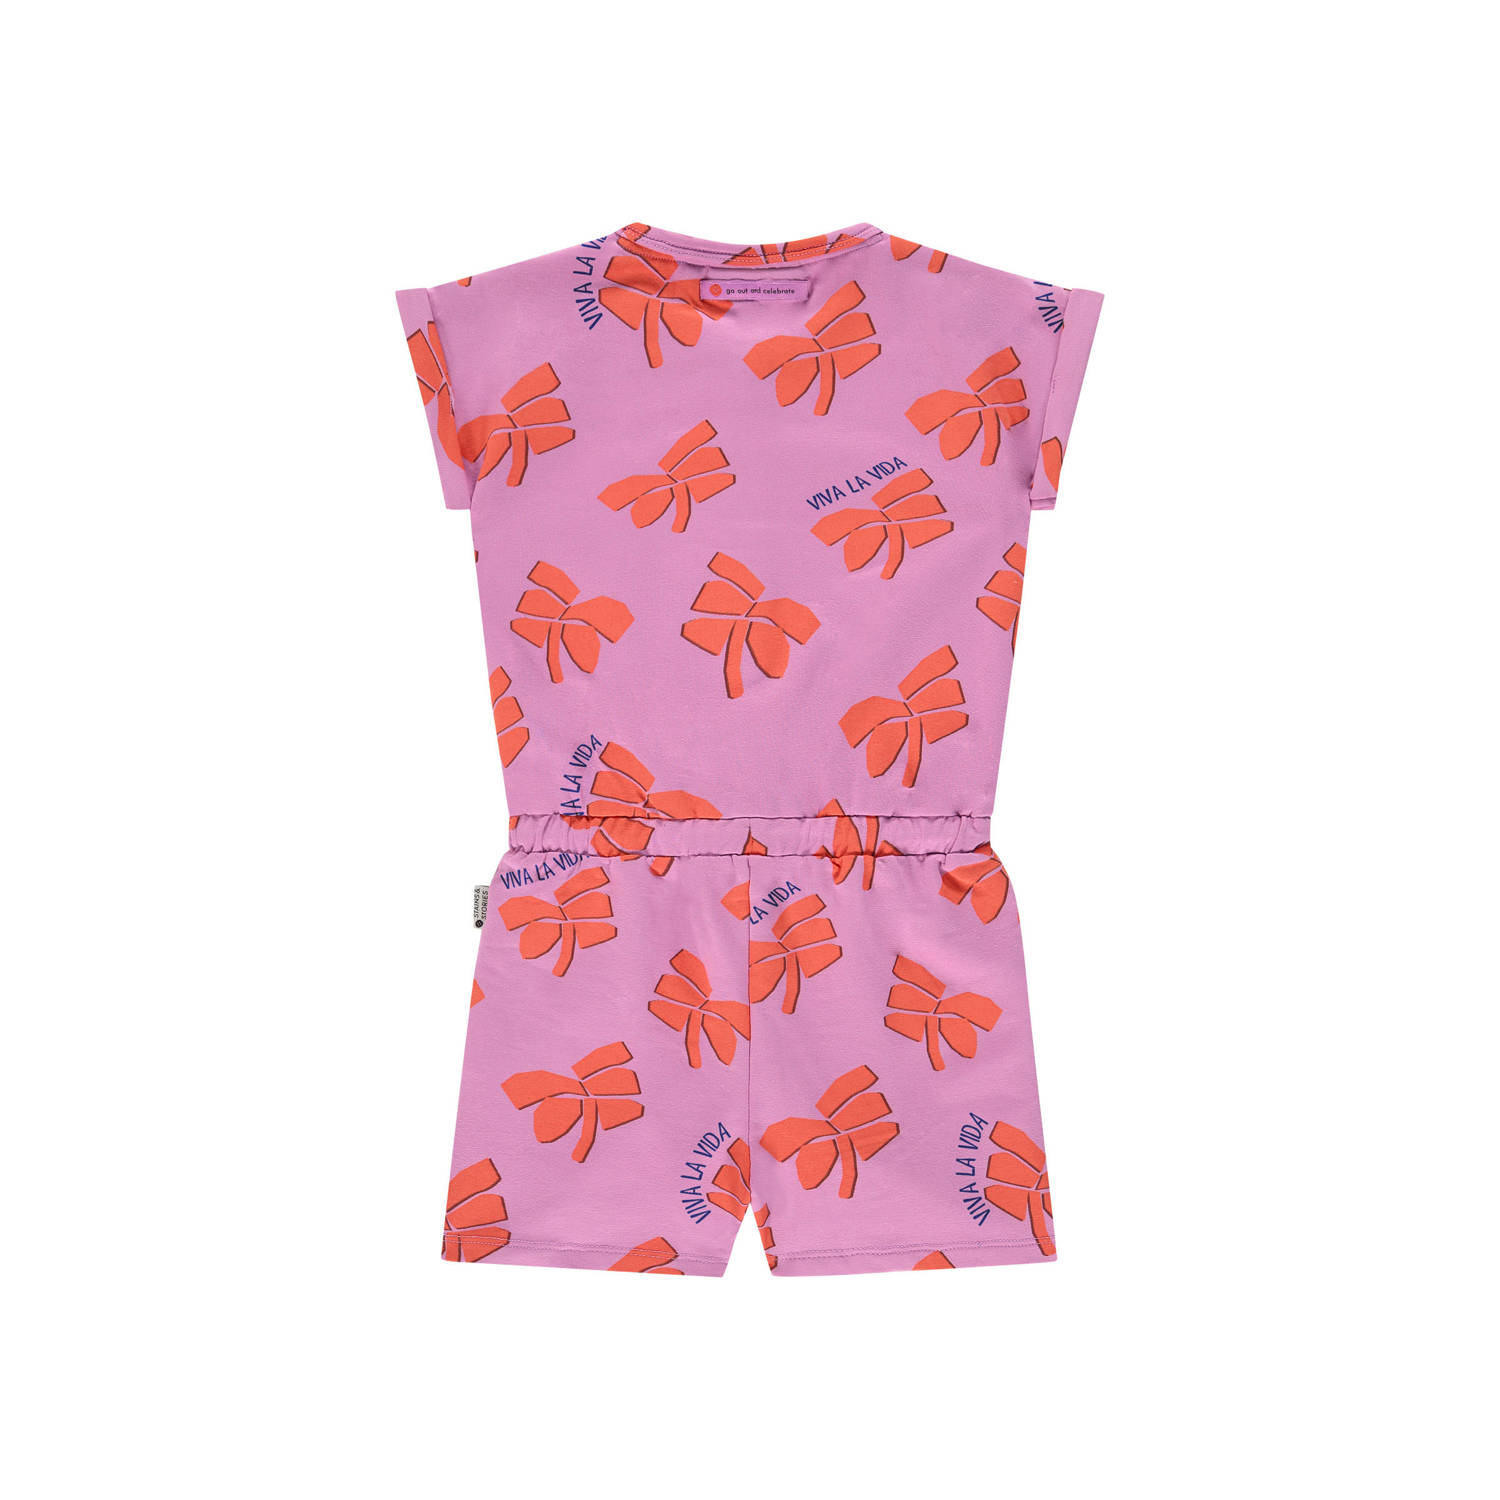 Stains&Stories jumpsuit met all over print paars oranje